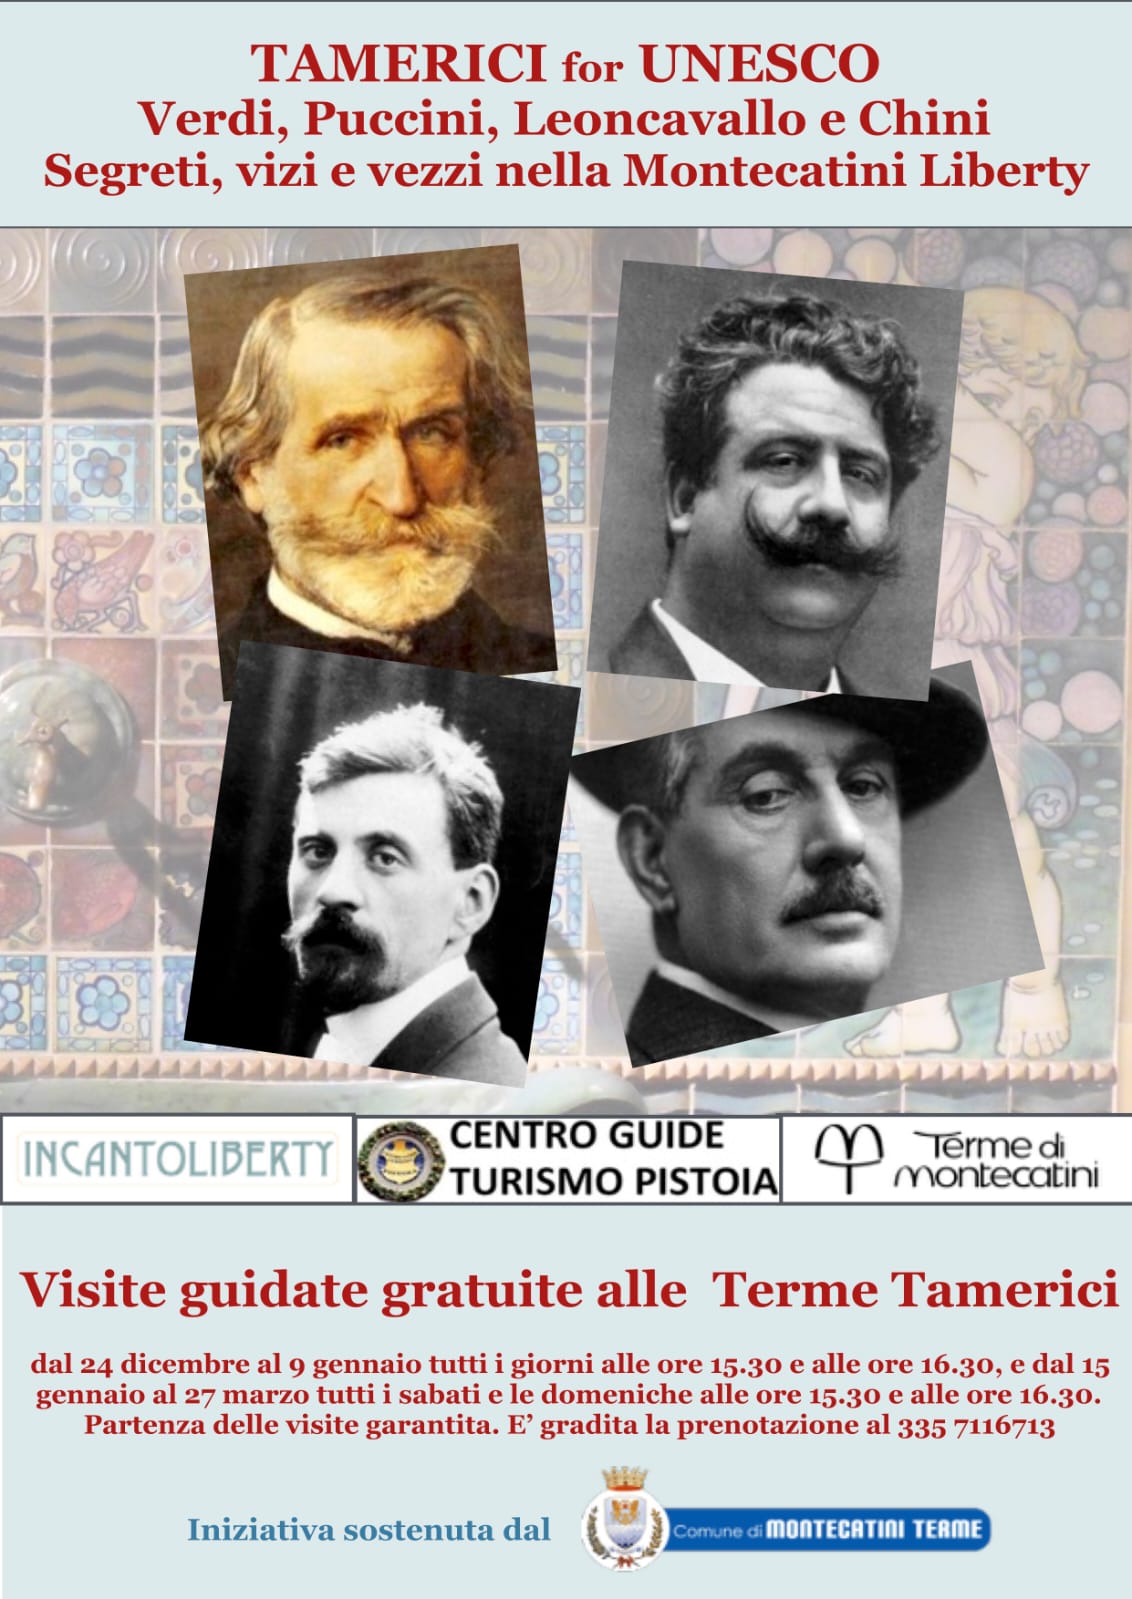 Tamerici for Unesco